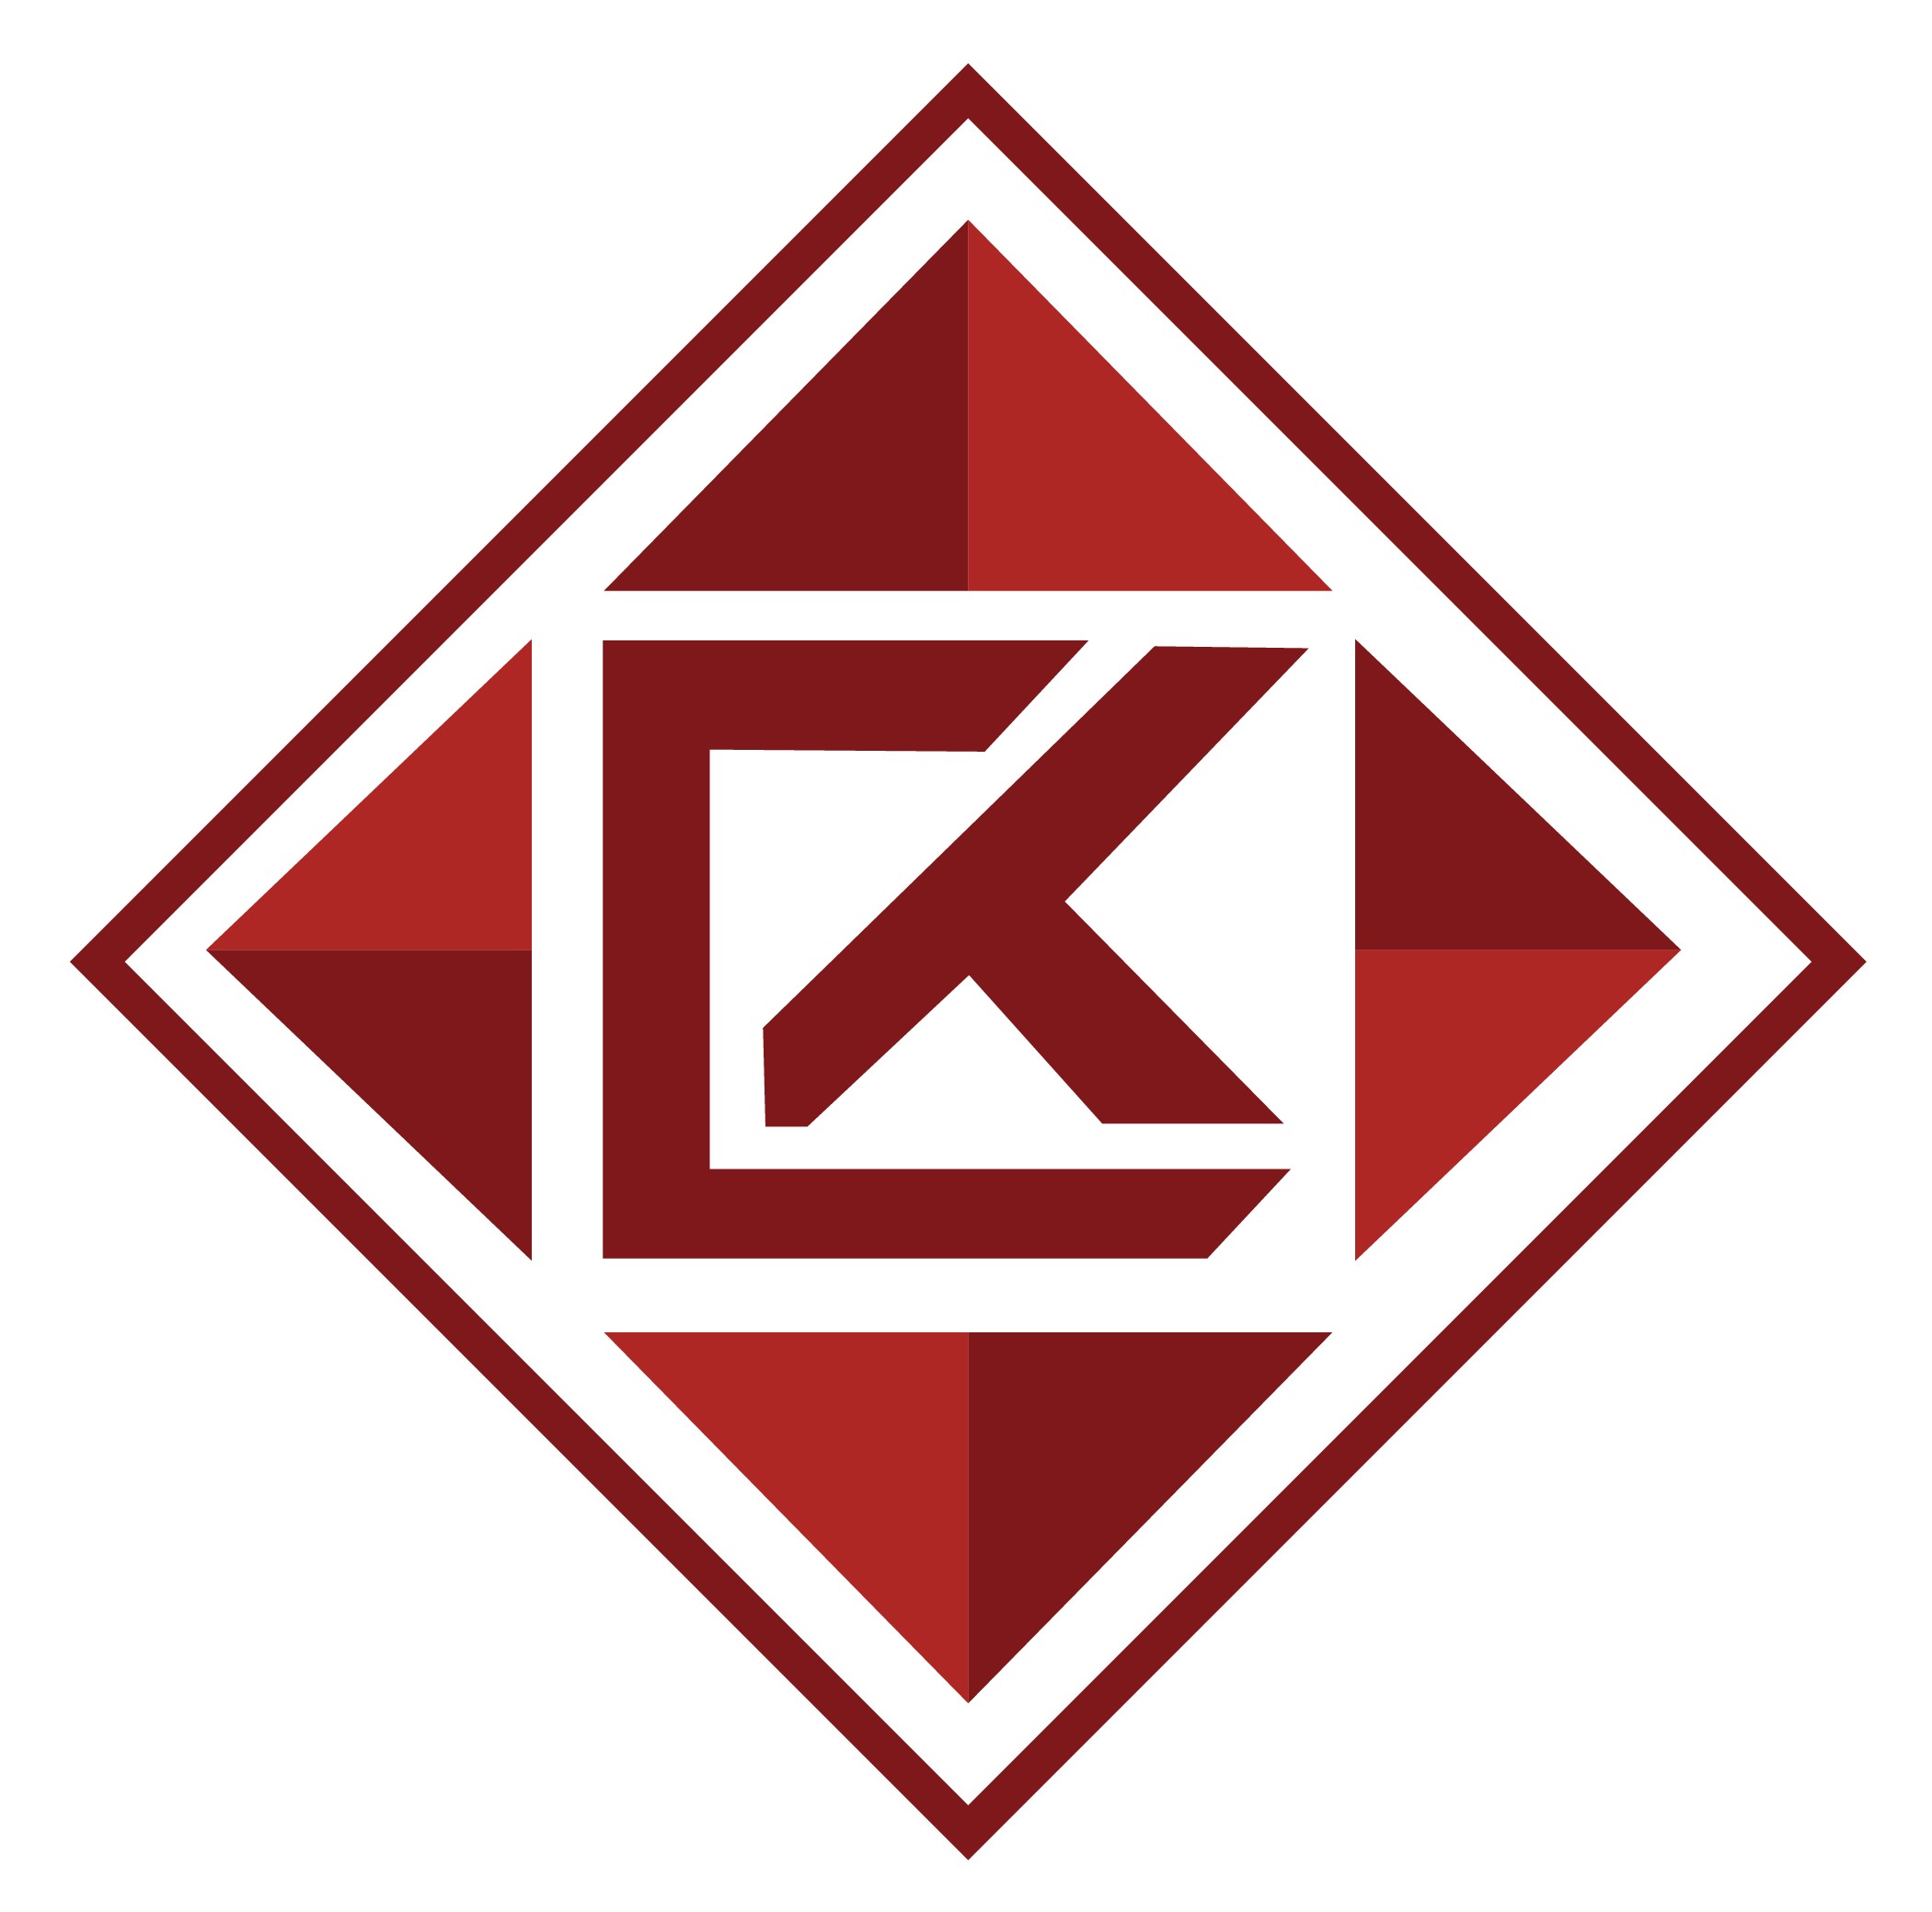 Cluster Knot Logo